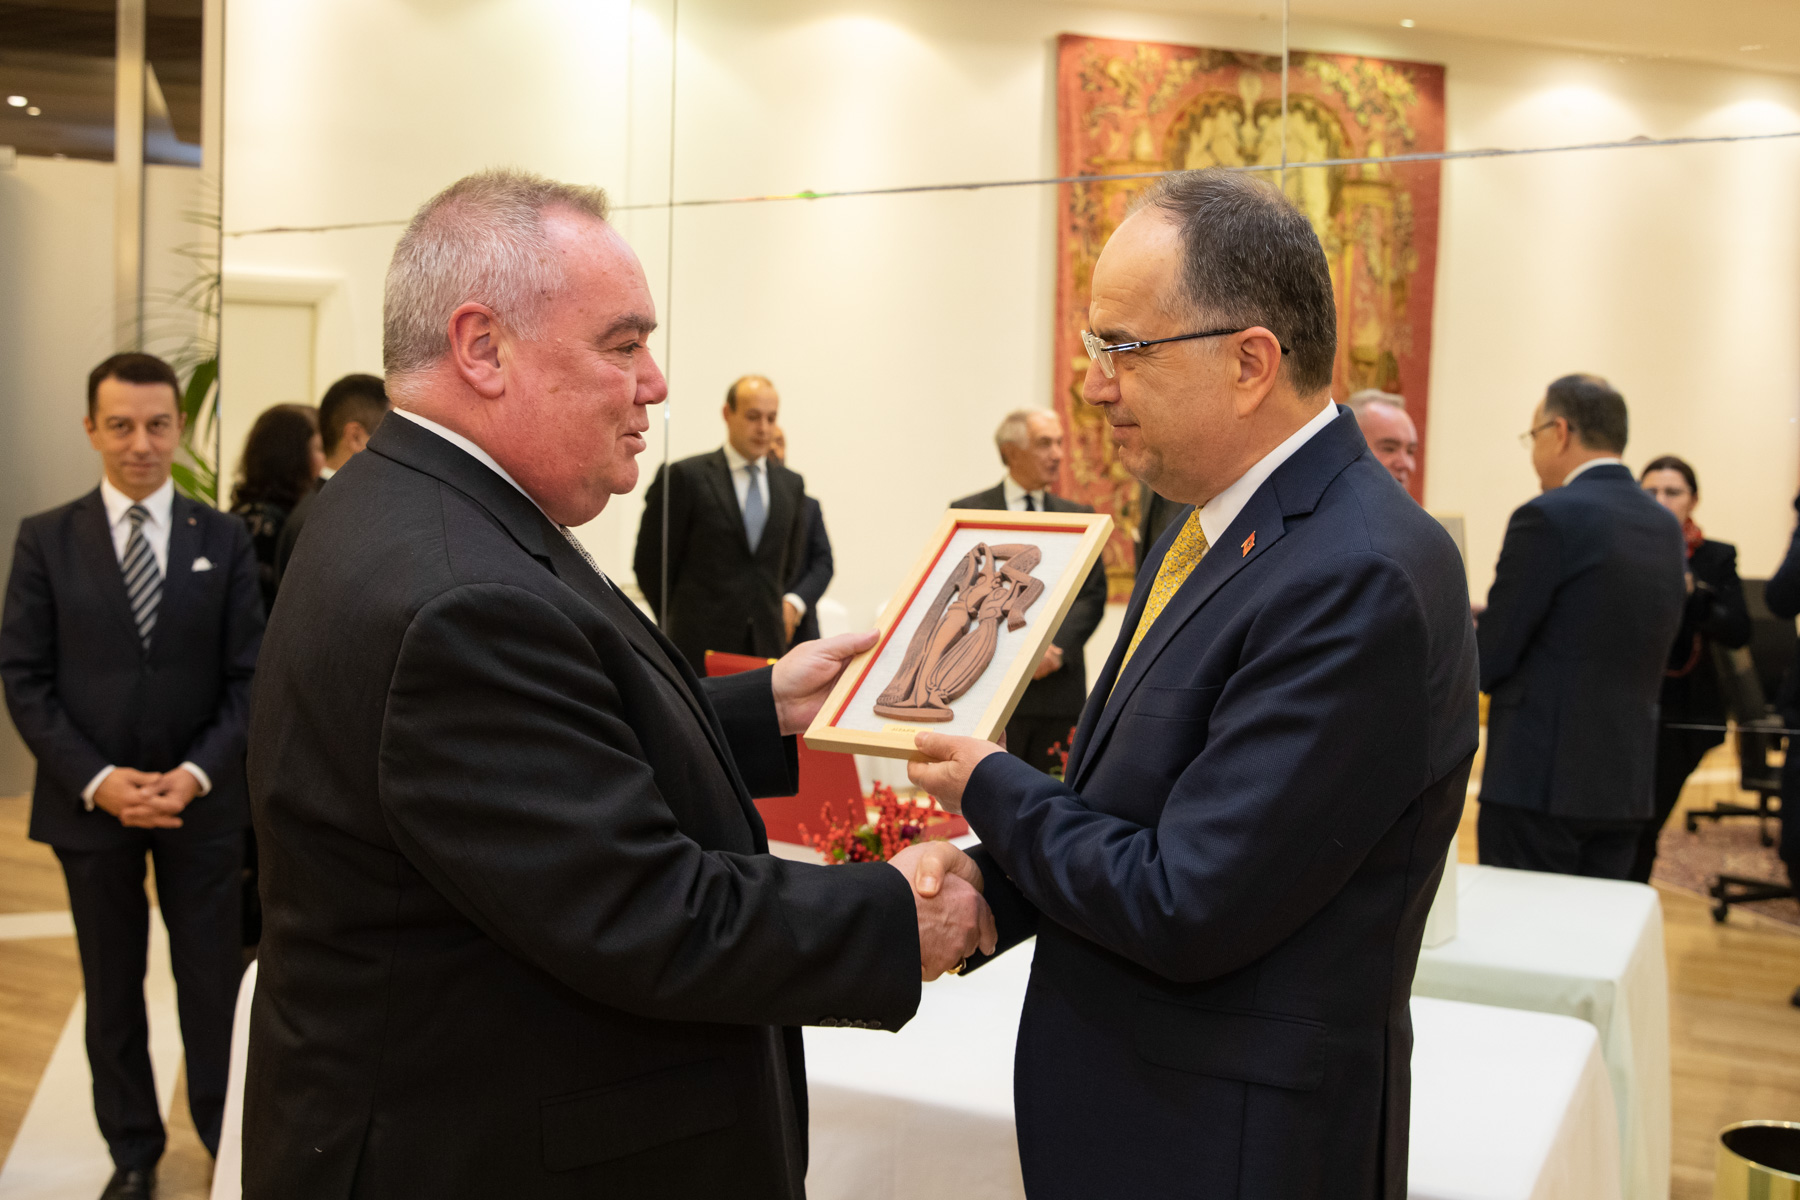 The Lieutenant of the Grand Master meets Albanian President Bajram Begaj